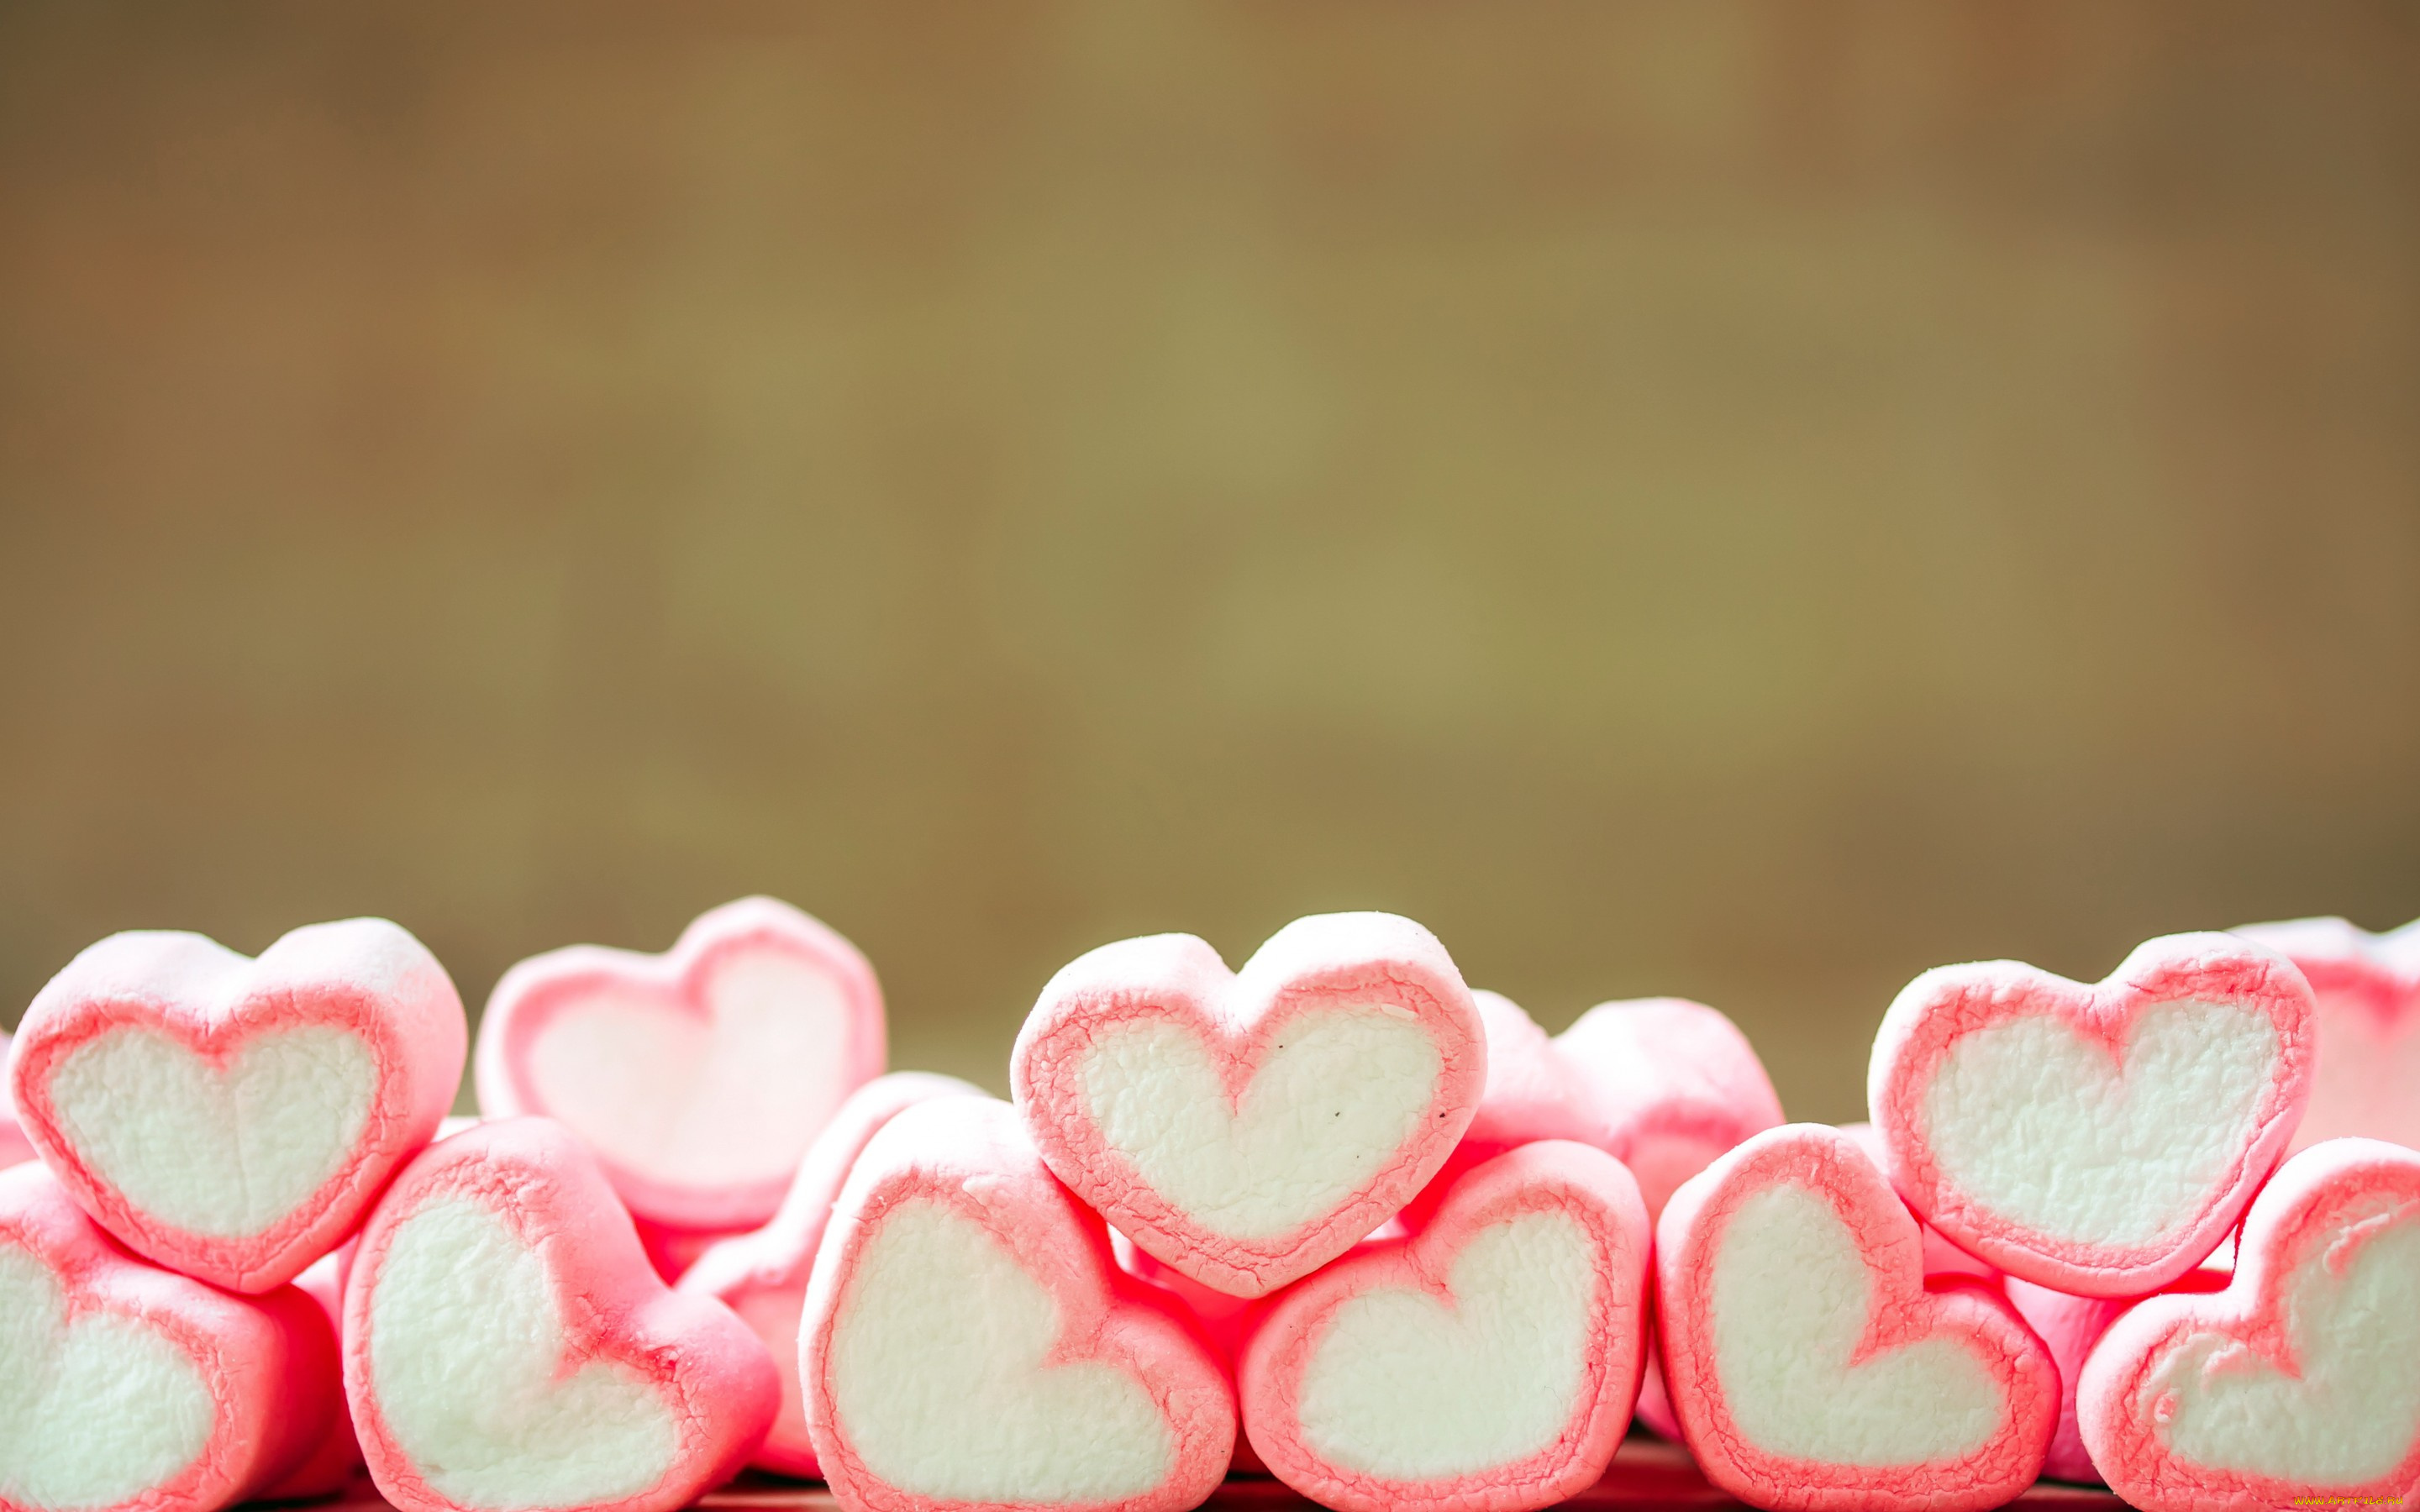 еда, конфеты, , шоколад, , сладости, love, candy, sweet, heart, сердечки, сладкое, романтика, любовь, romantic, зефир